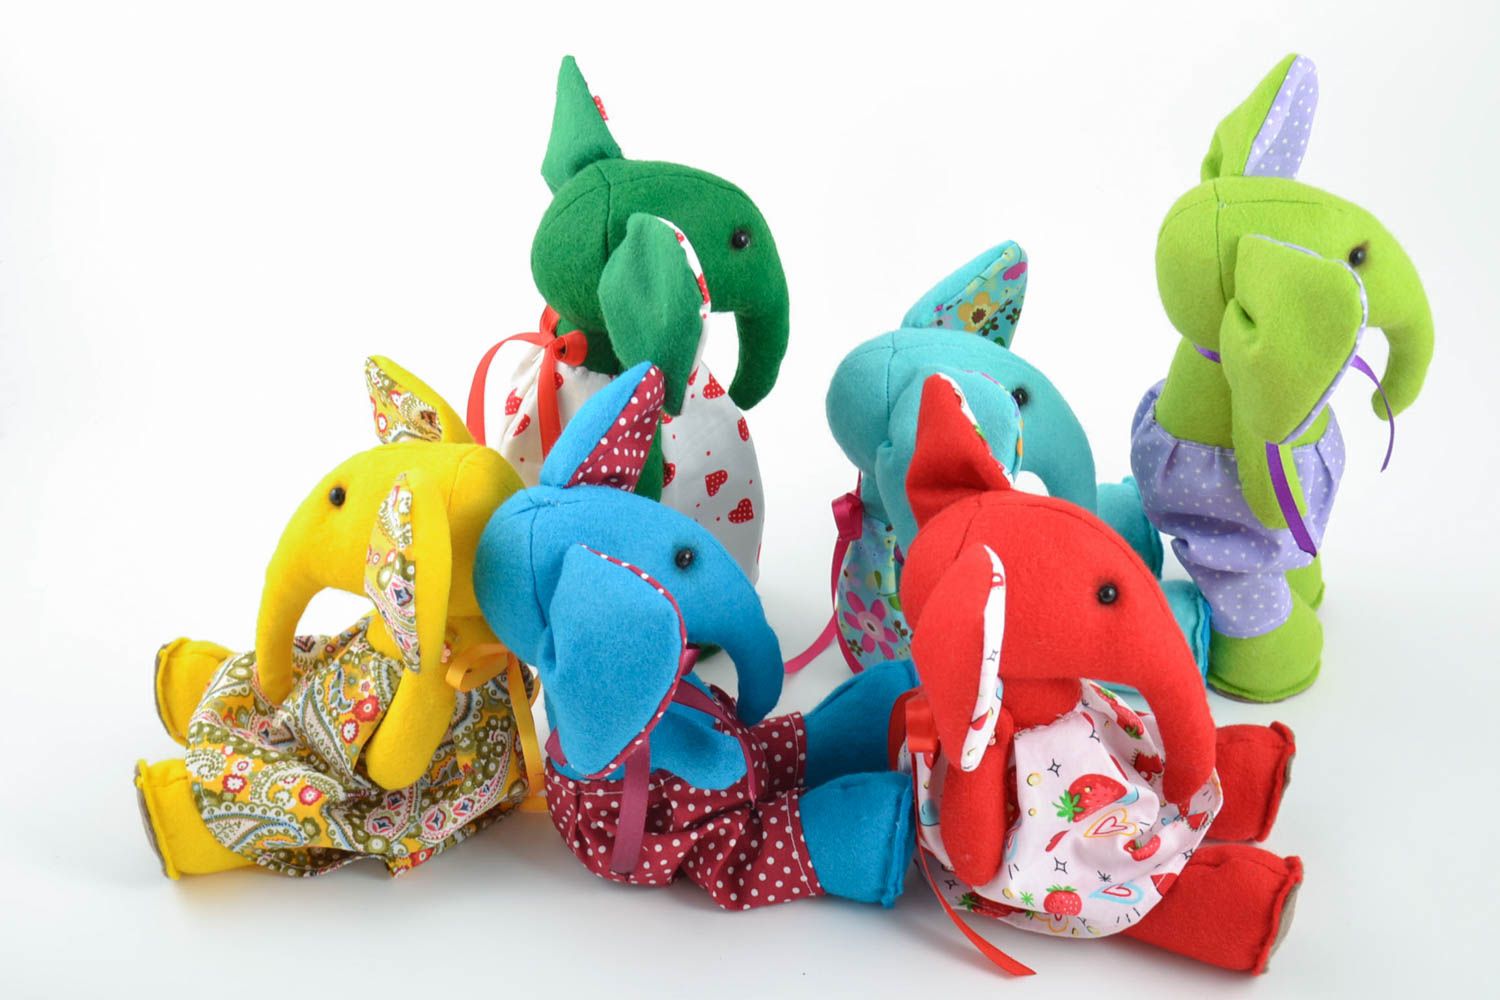 Filz Kuscheltiere Set 5 Stück Elefanten verschiedener Farben schön handmade foto 3